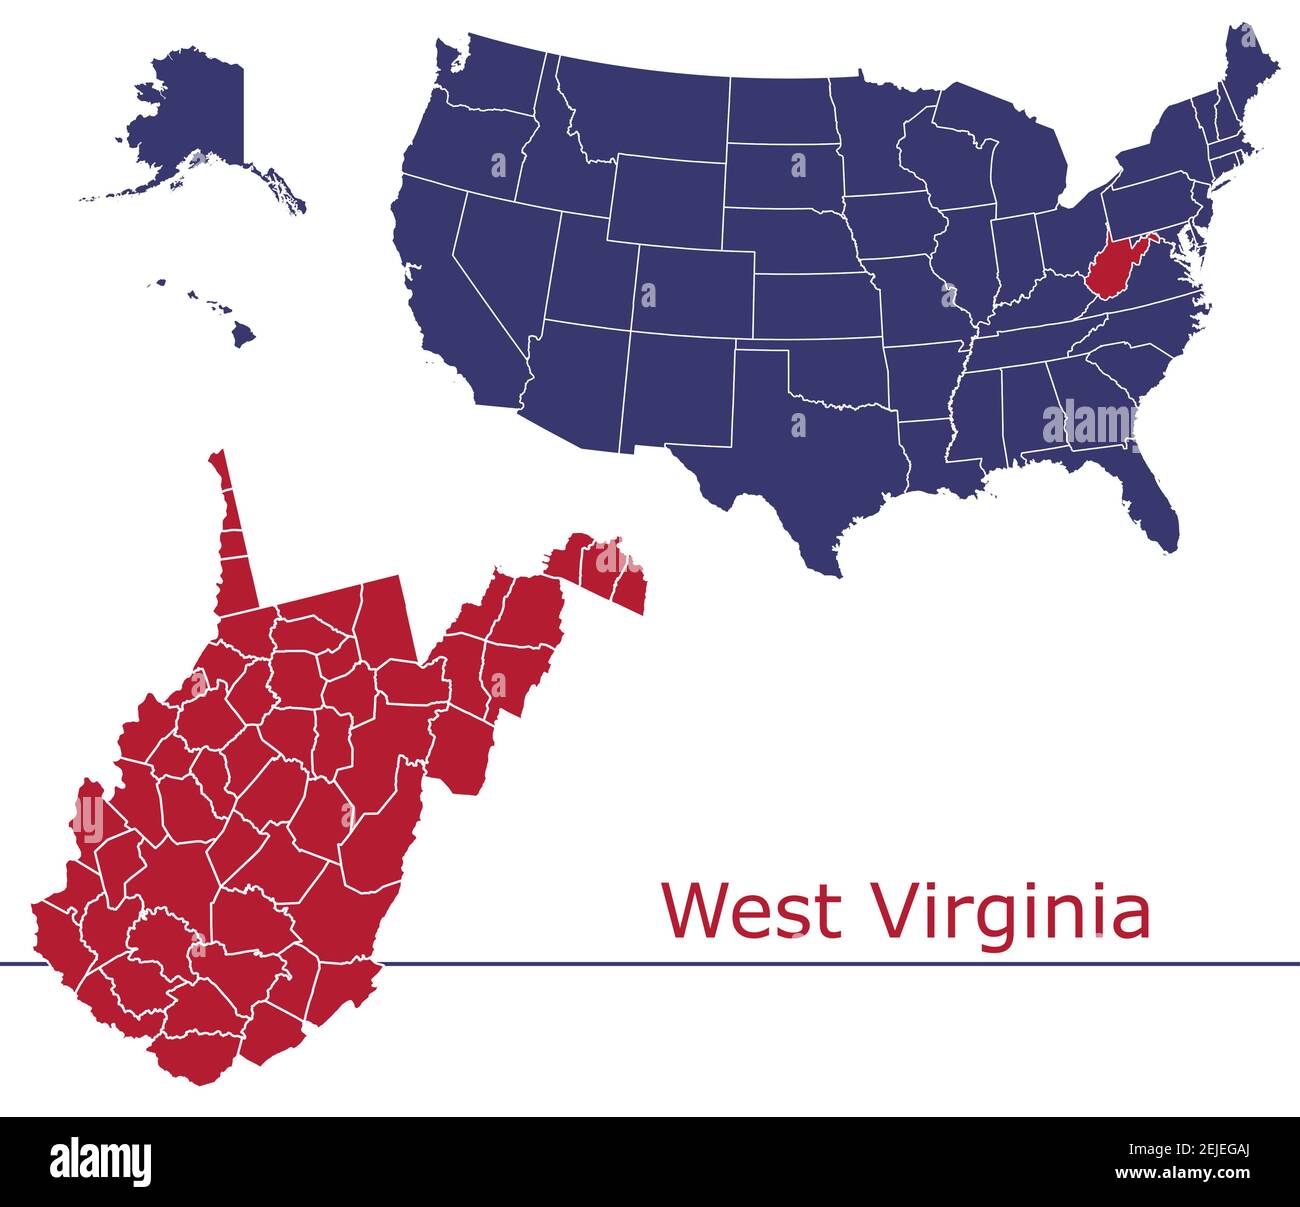 West Virginia Grafschaften Vektorkarte Umriss mit USA Kartenfarben Nationalflagge Stock Vektor